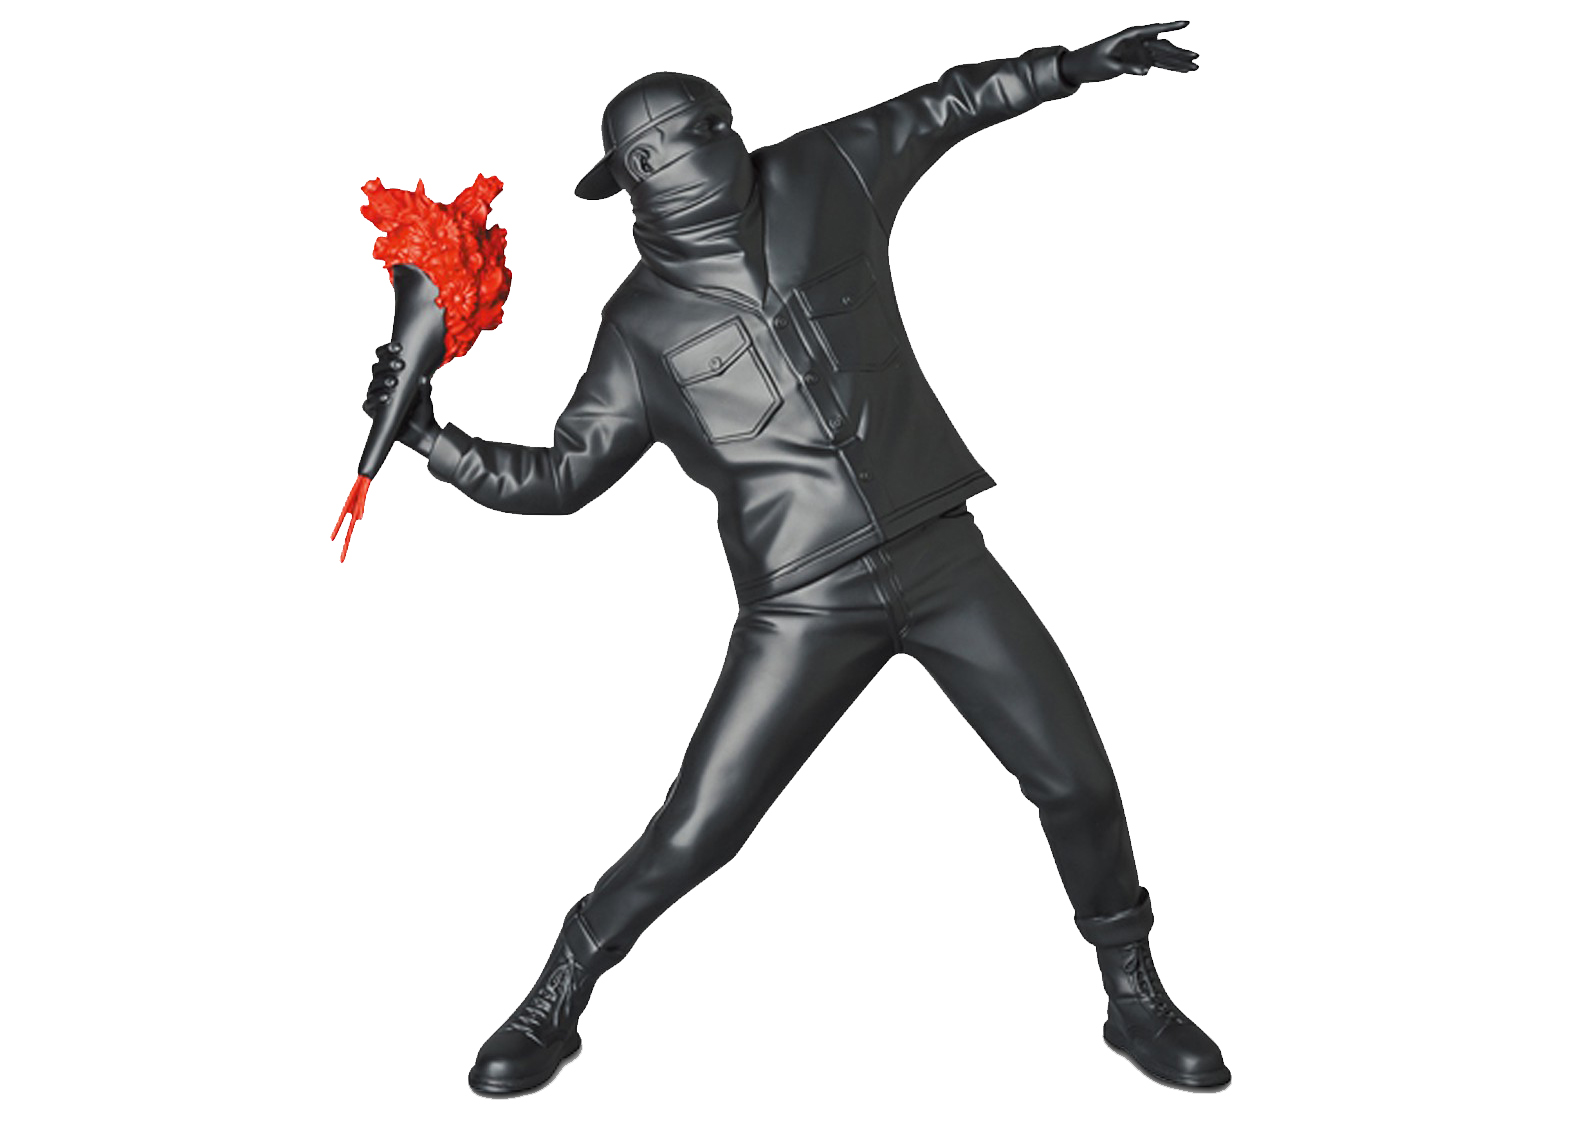 Medicom Toy Flower Bomber (Black With Red Flower Version) Sculpture